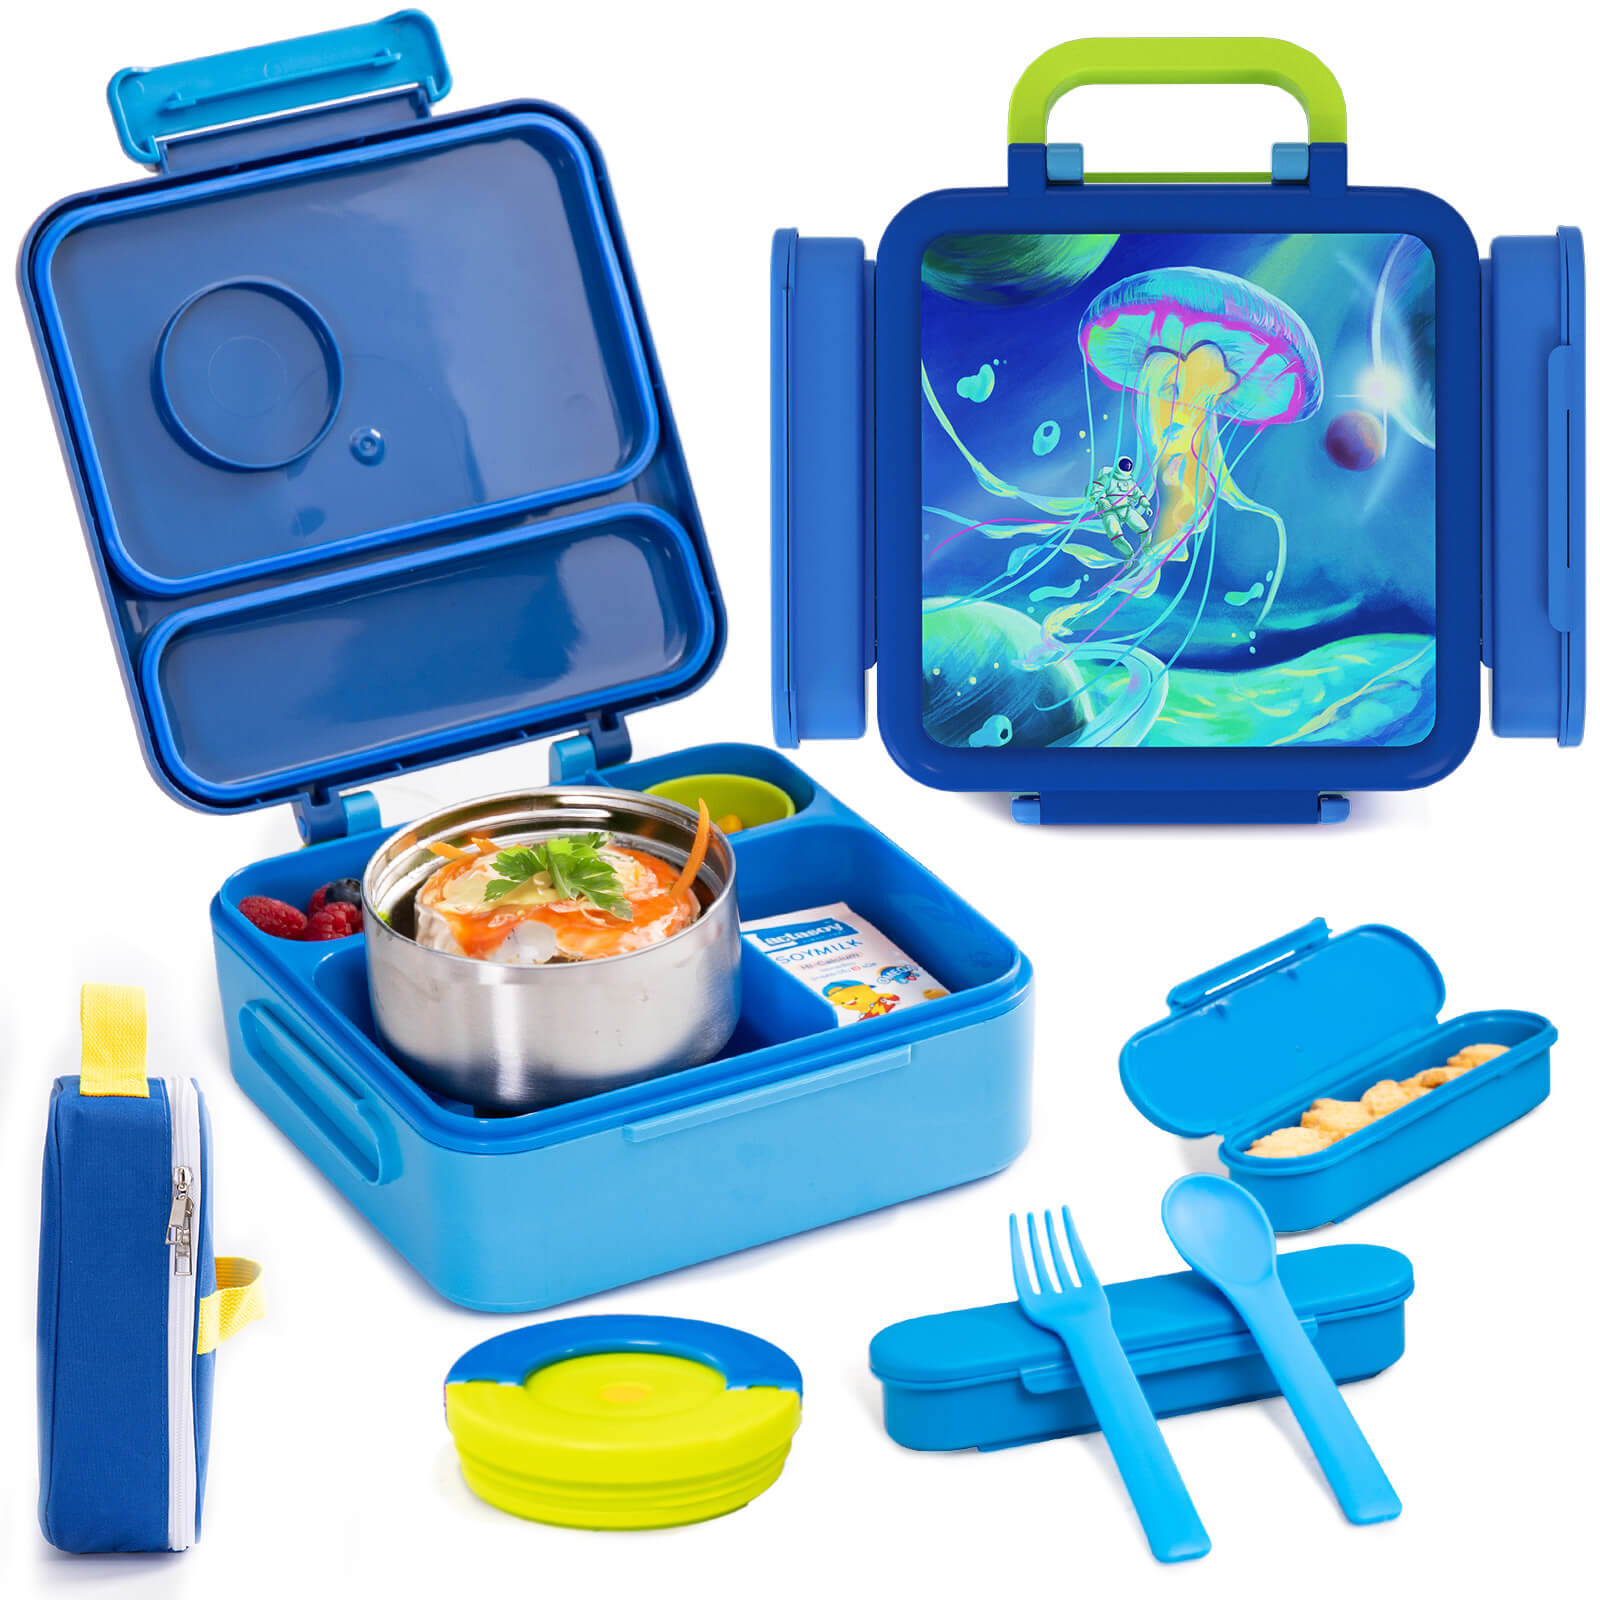 Bentgo Kids Leak Proof Childrens Lunch Box | Color: Blue | Size: Os | Selinajkk's Closet